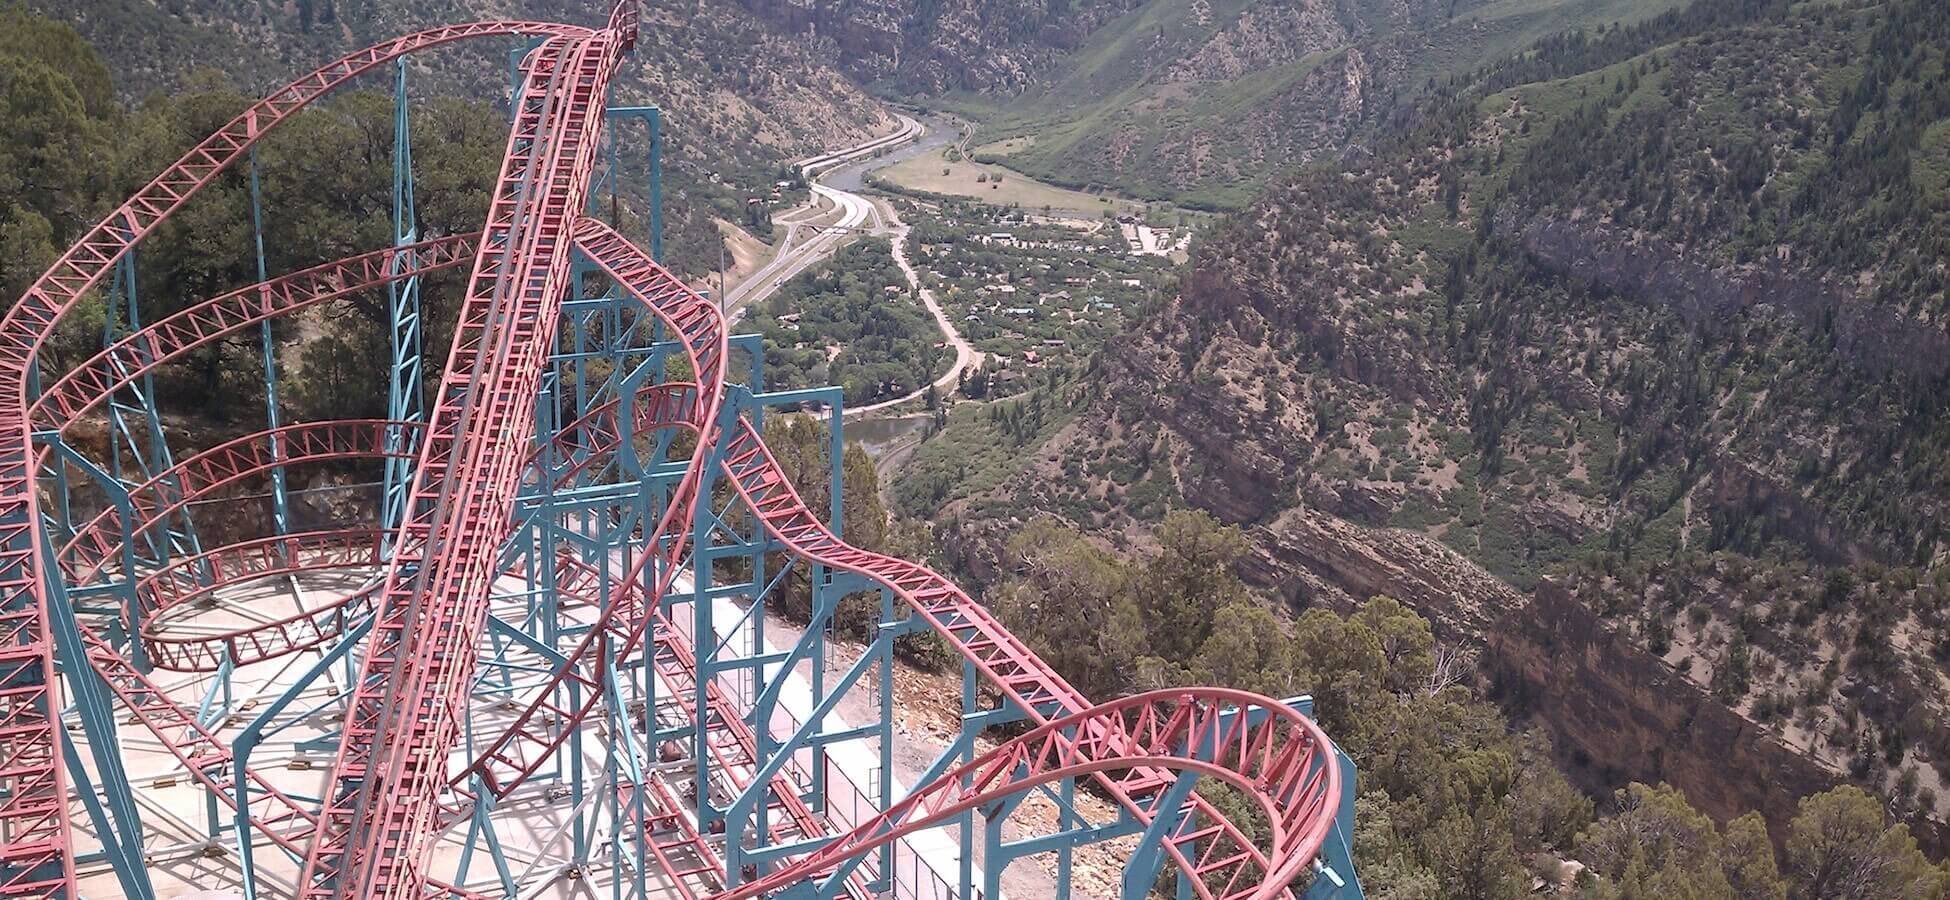 Defiance: New Glenwood Caverns roller coaster has highest drop in U.S.